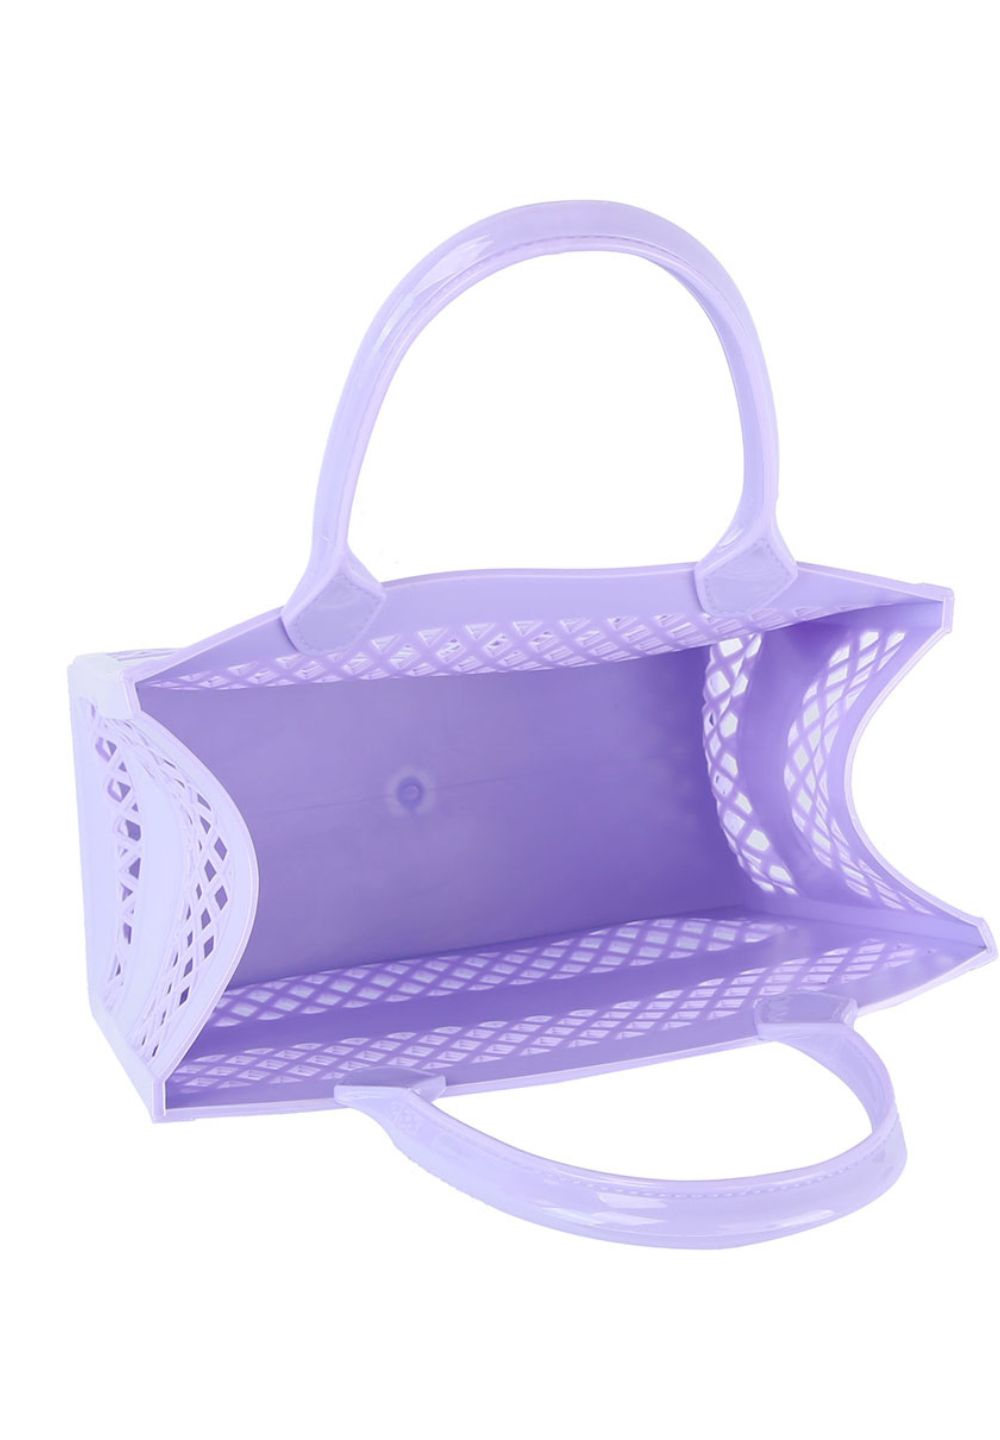 Lavender Laser Cut Jelly Tote Handbag